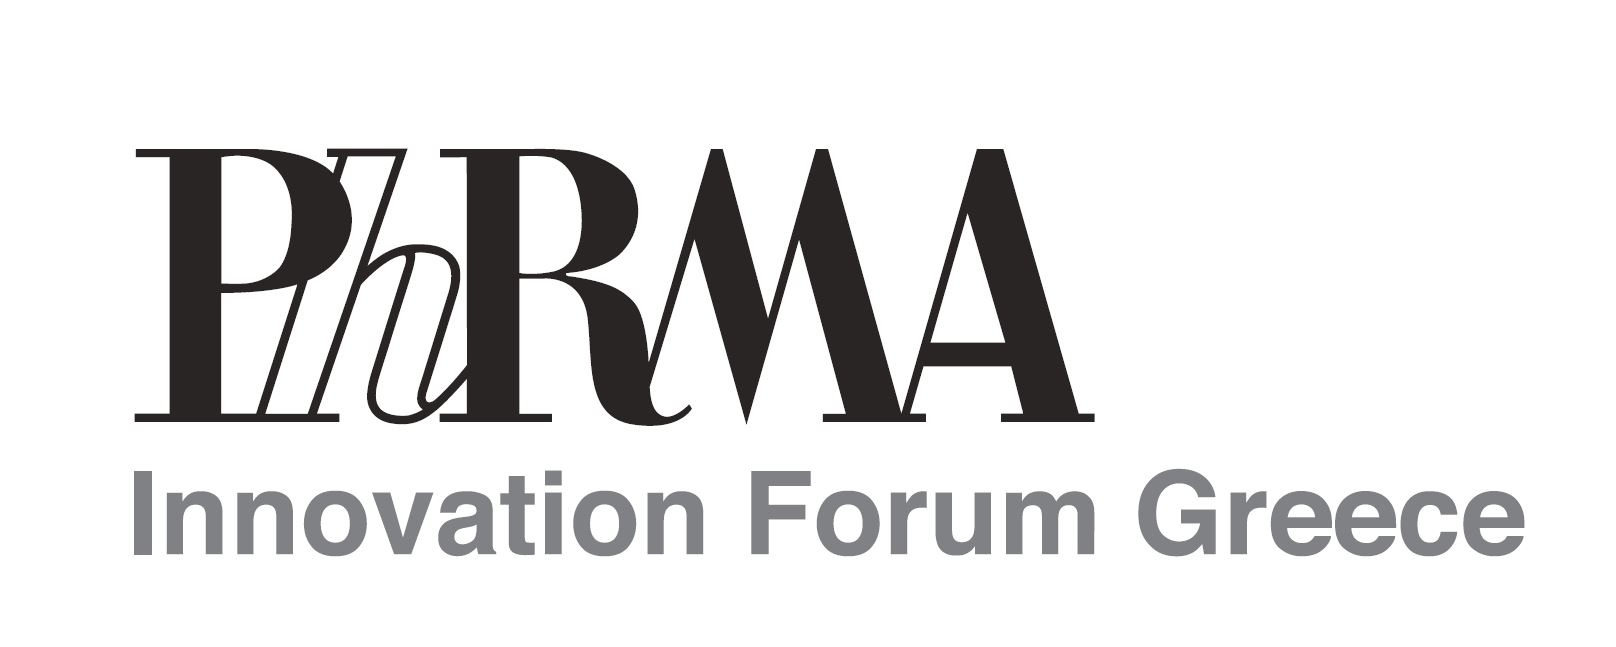 PhRMA Innovation Forum: Nέο Διοικητικό Συμβούλιο και ψήφισμα Αρχών λειτουργίας και δράσης